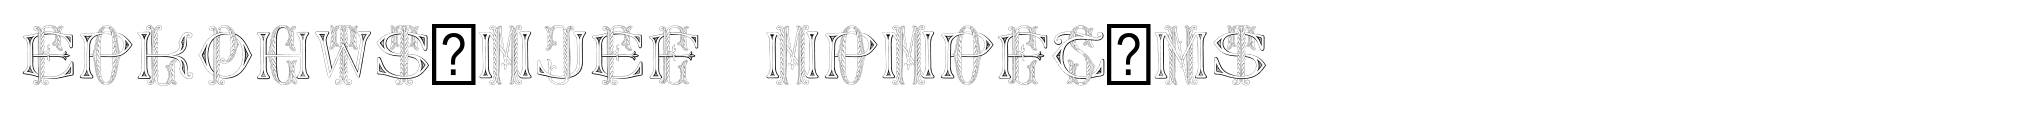 Dolphus-Mieg Monograms image